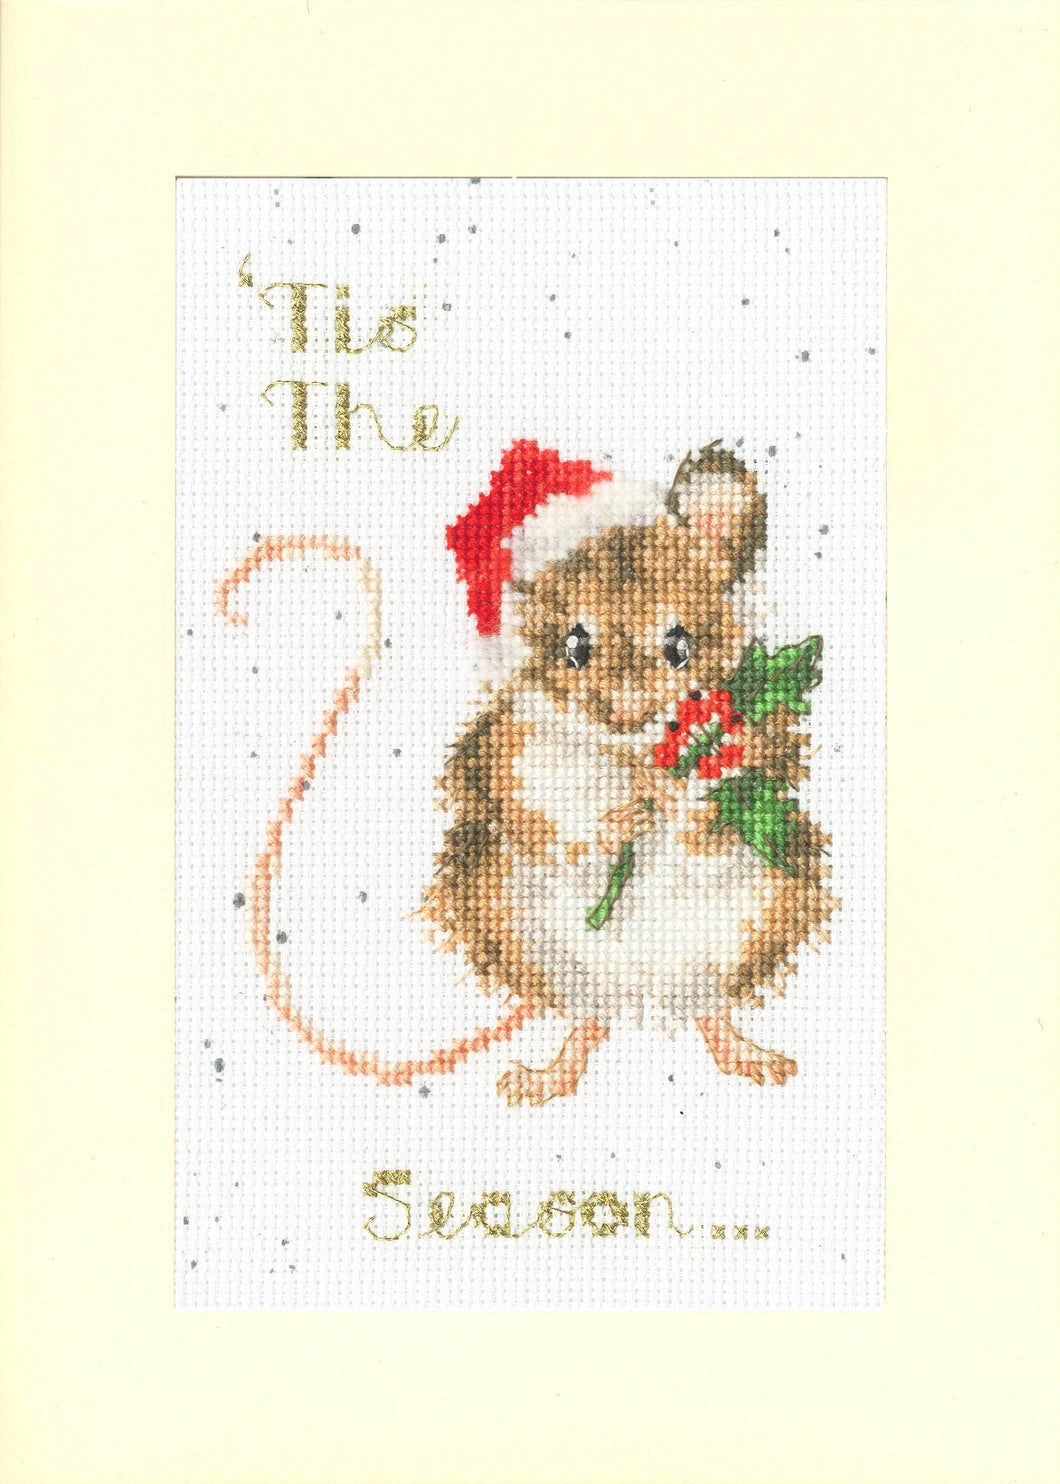 'Tis The Season Christmas Card Cross Stitch Kit